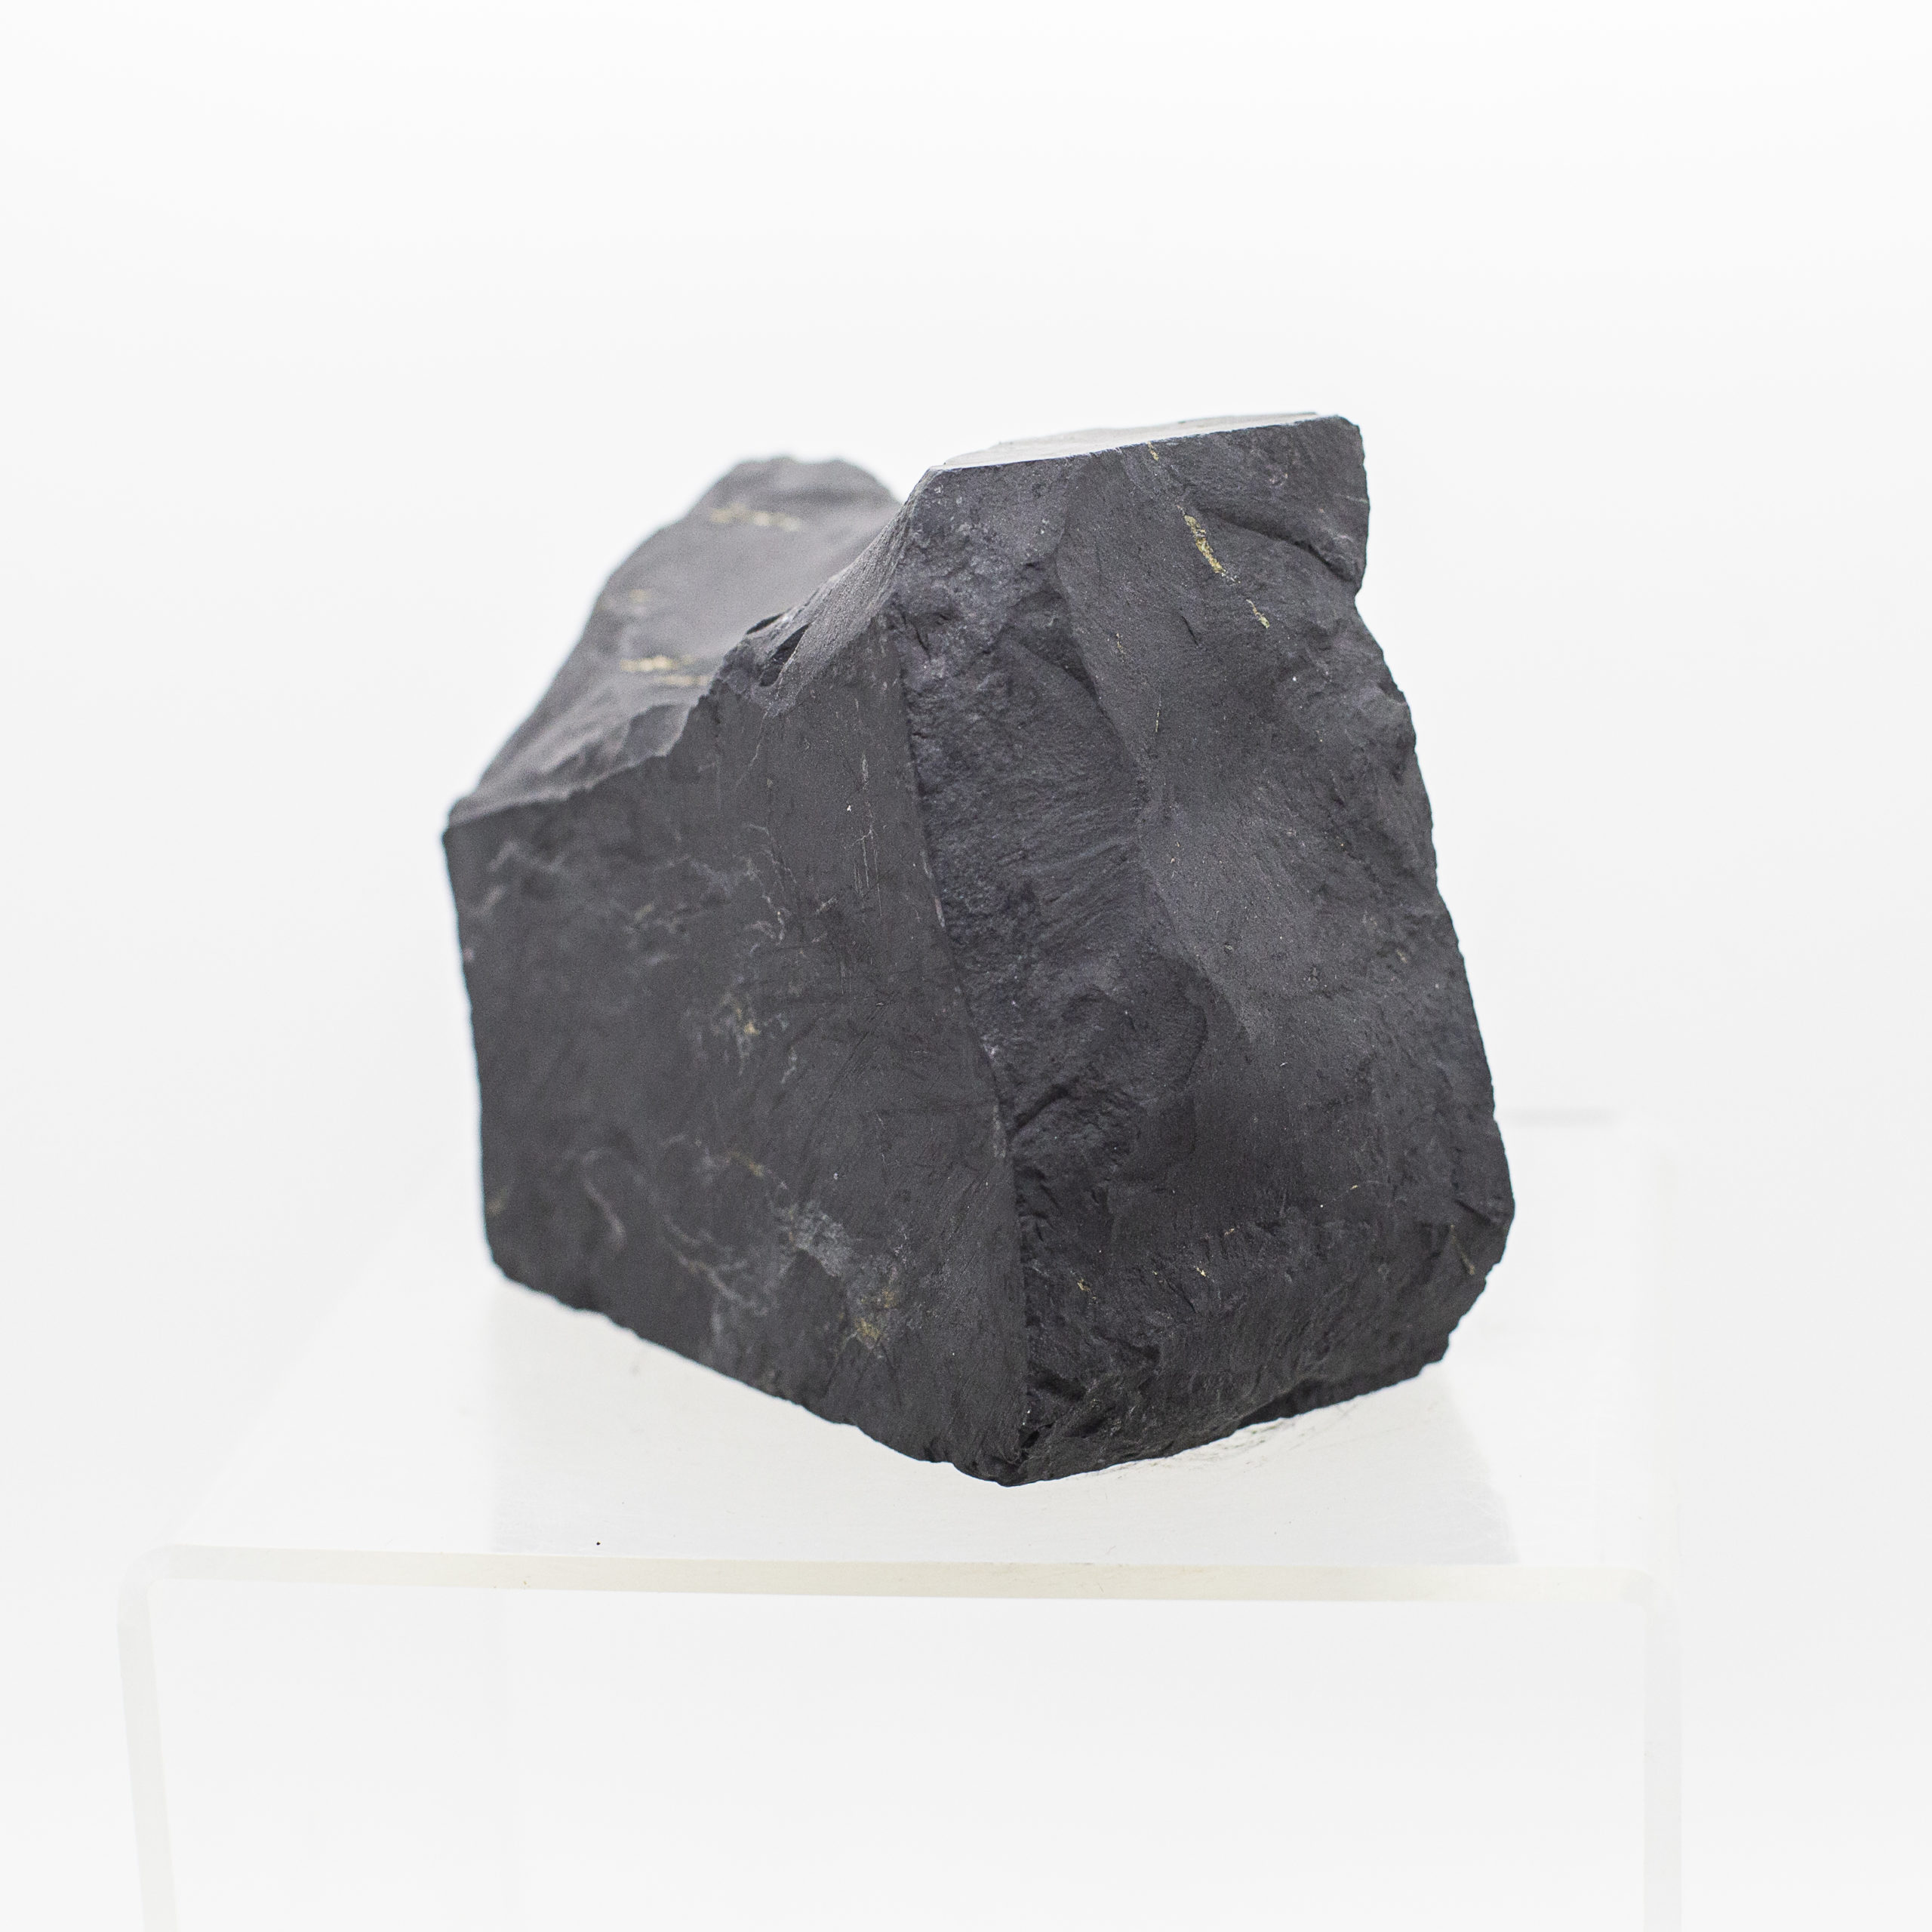 A new Stone With Anti-Inflammatory and Grounding Properties, Shungite ...